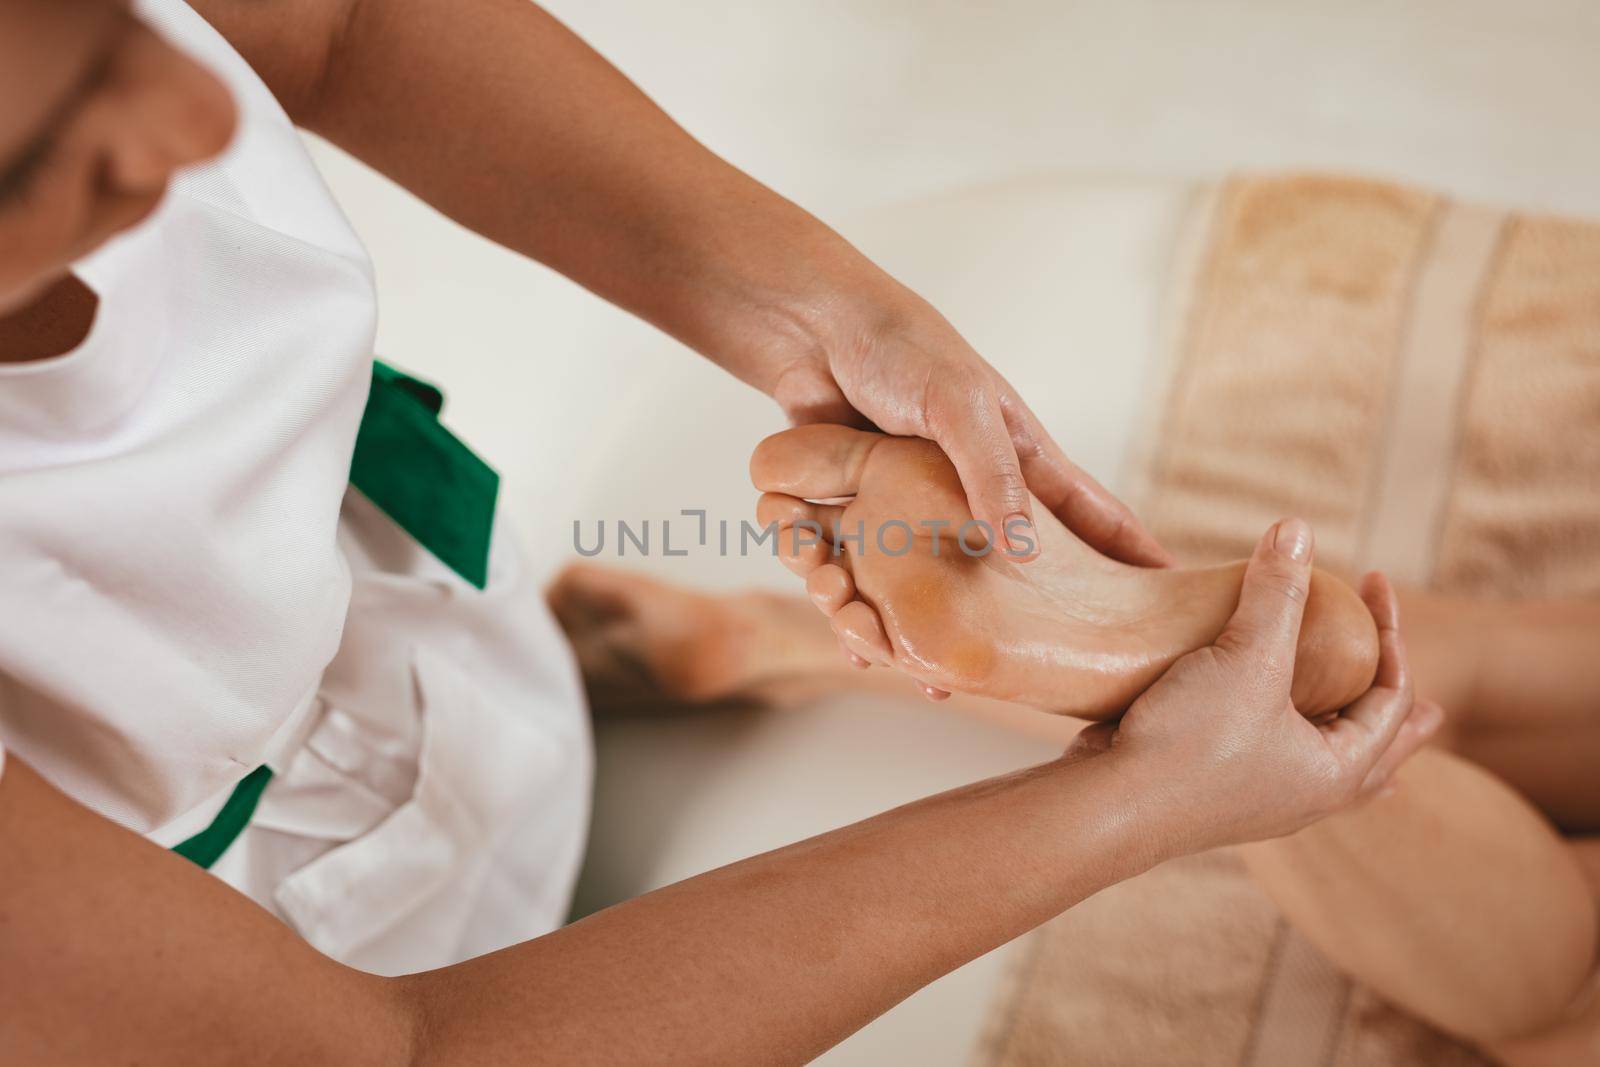 Reflexology Foot Massage by MilanMarkovic78